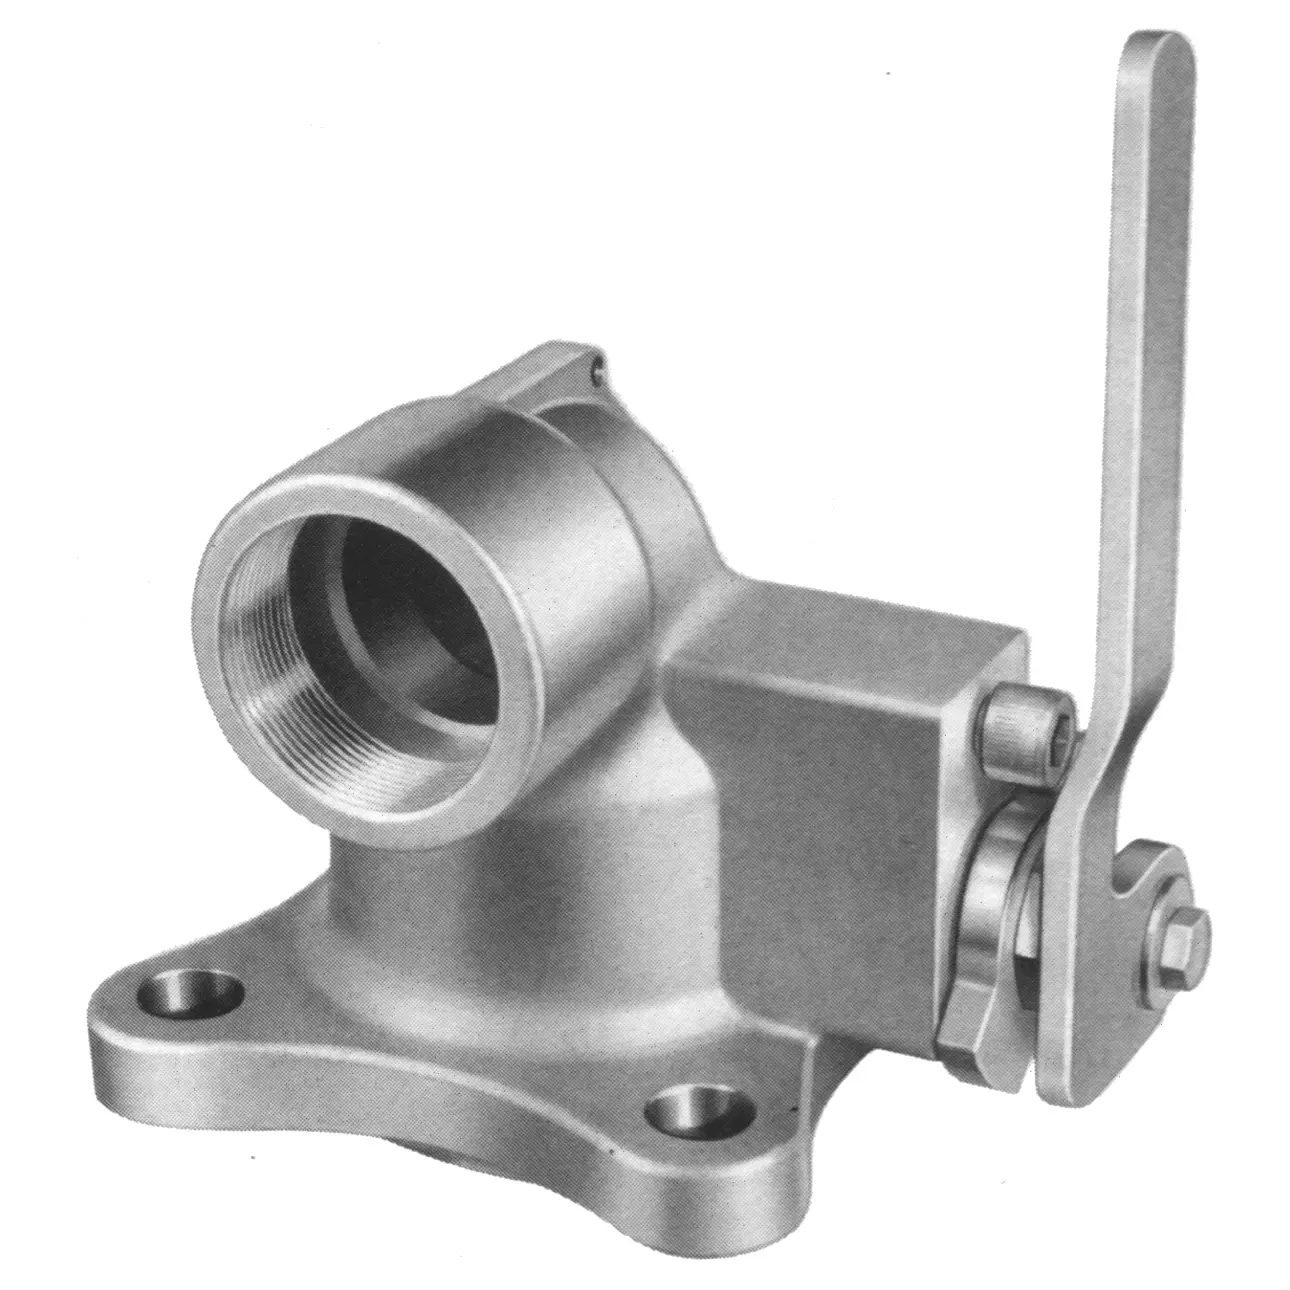 ValmetJamesbury™ ball valve, series 6RA3